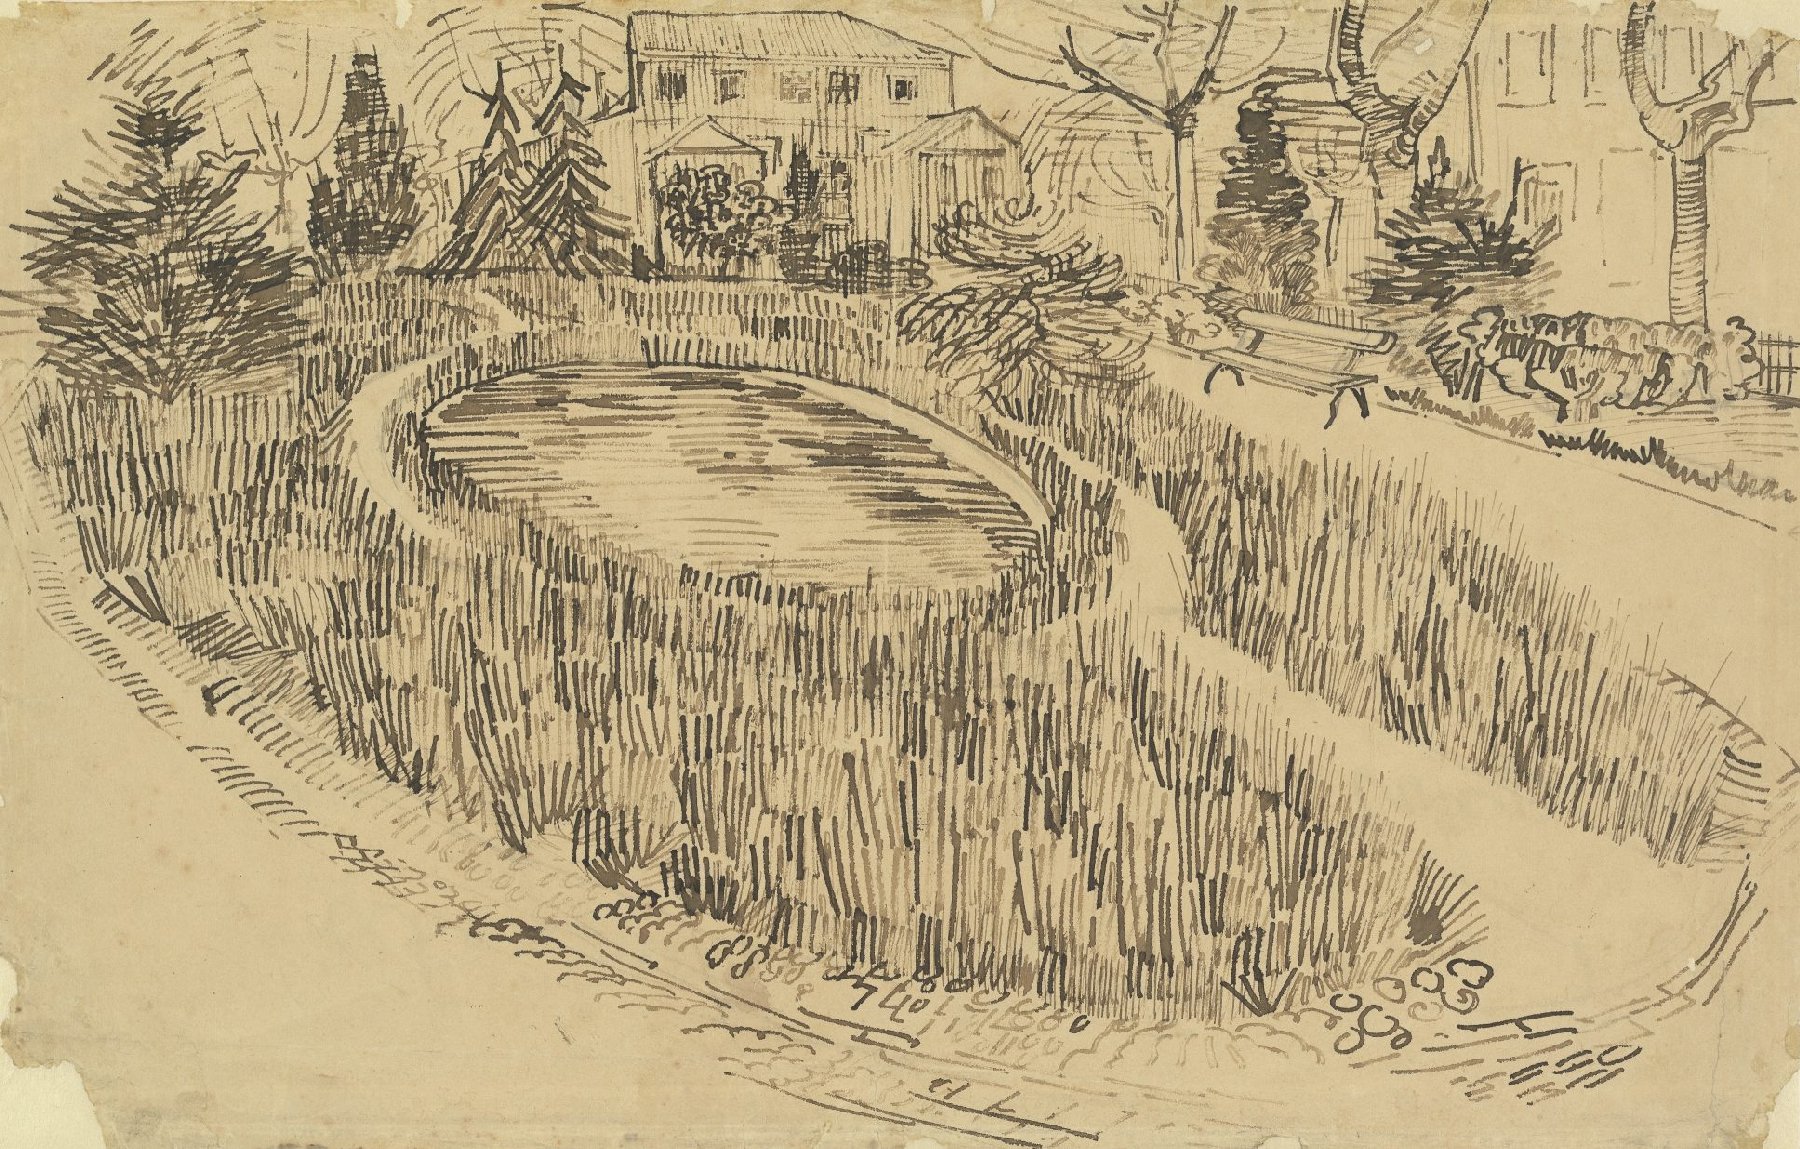 Park met vijver voor het Gele Huis Vincent van Gogh (1853 - 1890), Arles, april 1888